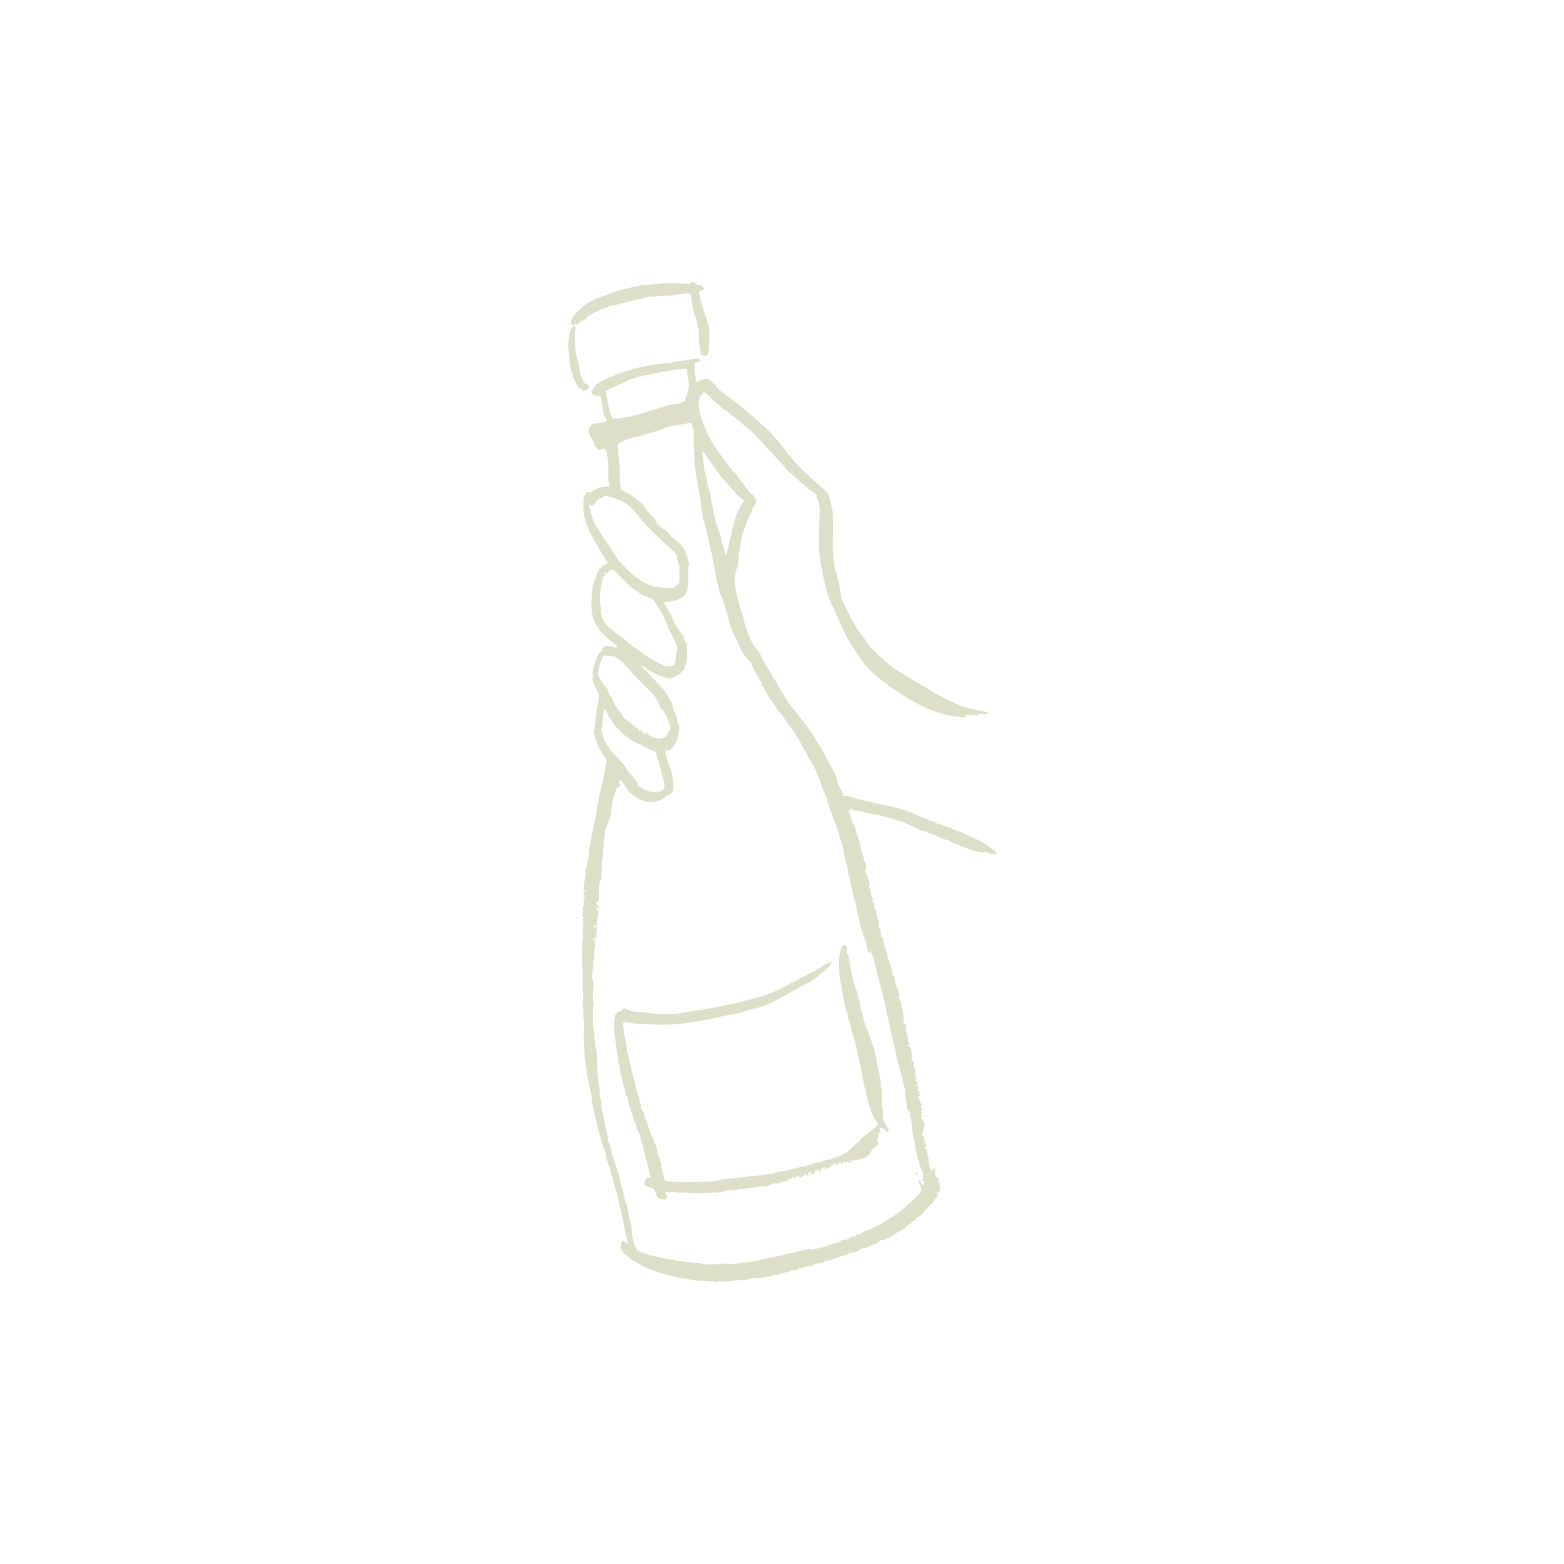 Champaigne Bottle Popping